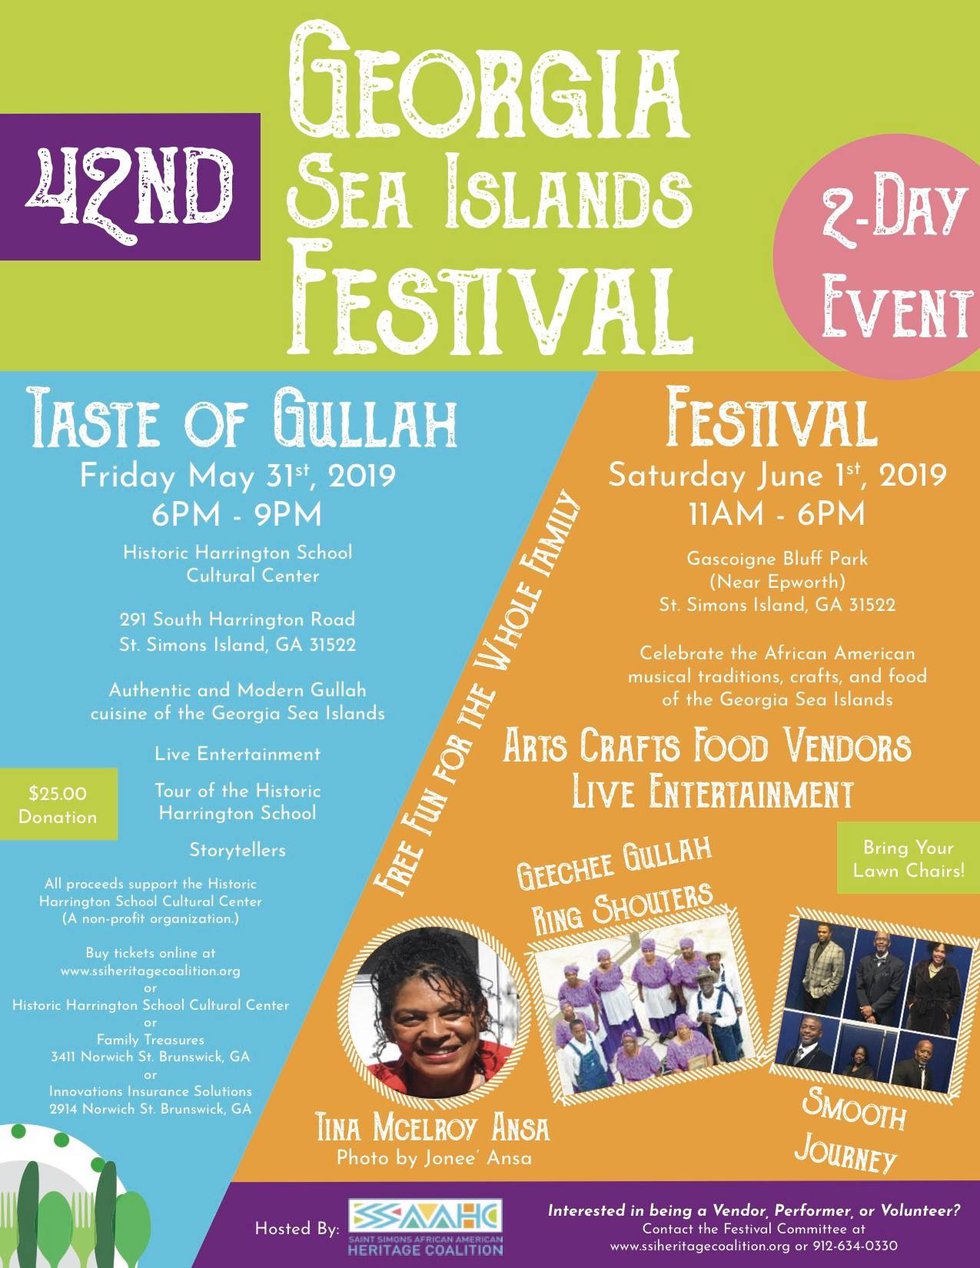 42nd annual Sea Islands Festival